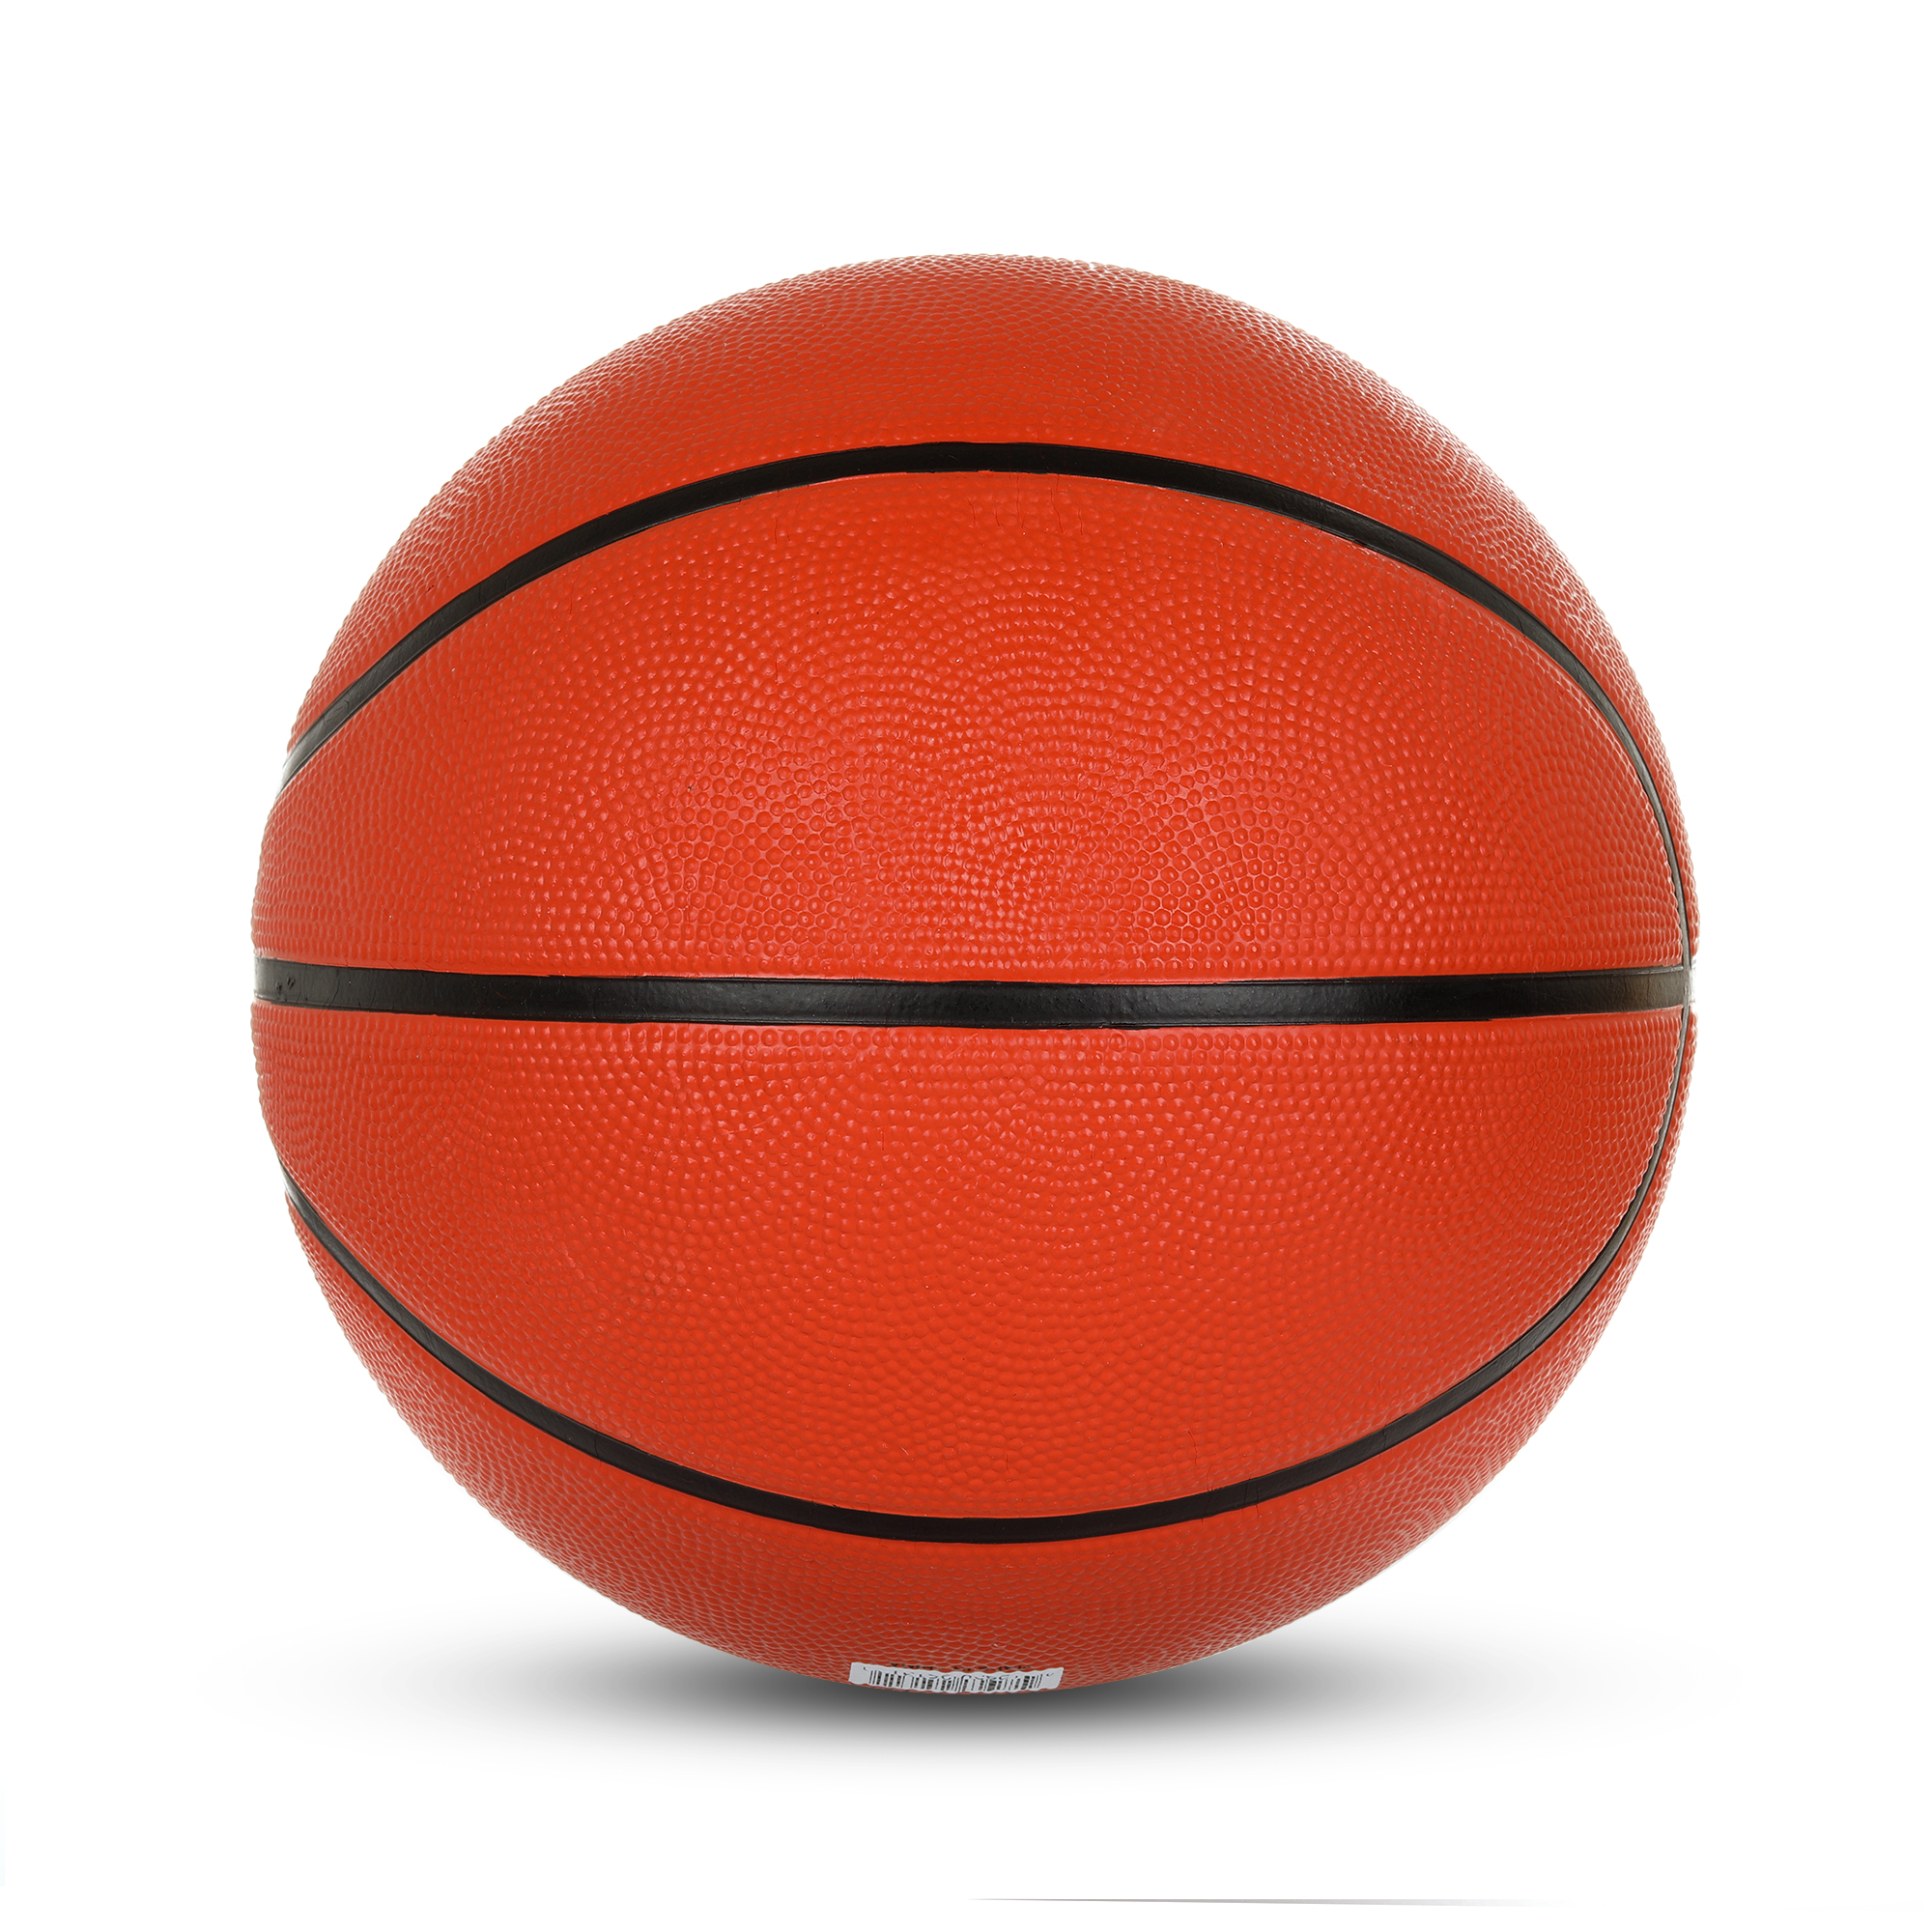 AND1 Fantom Street Basketball 29.5 Full Size, Orange - image 2 of 7